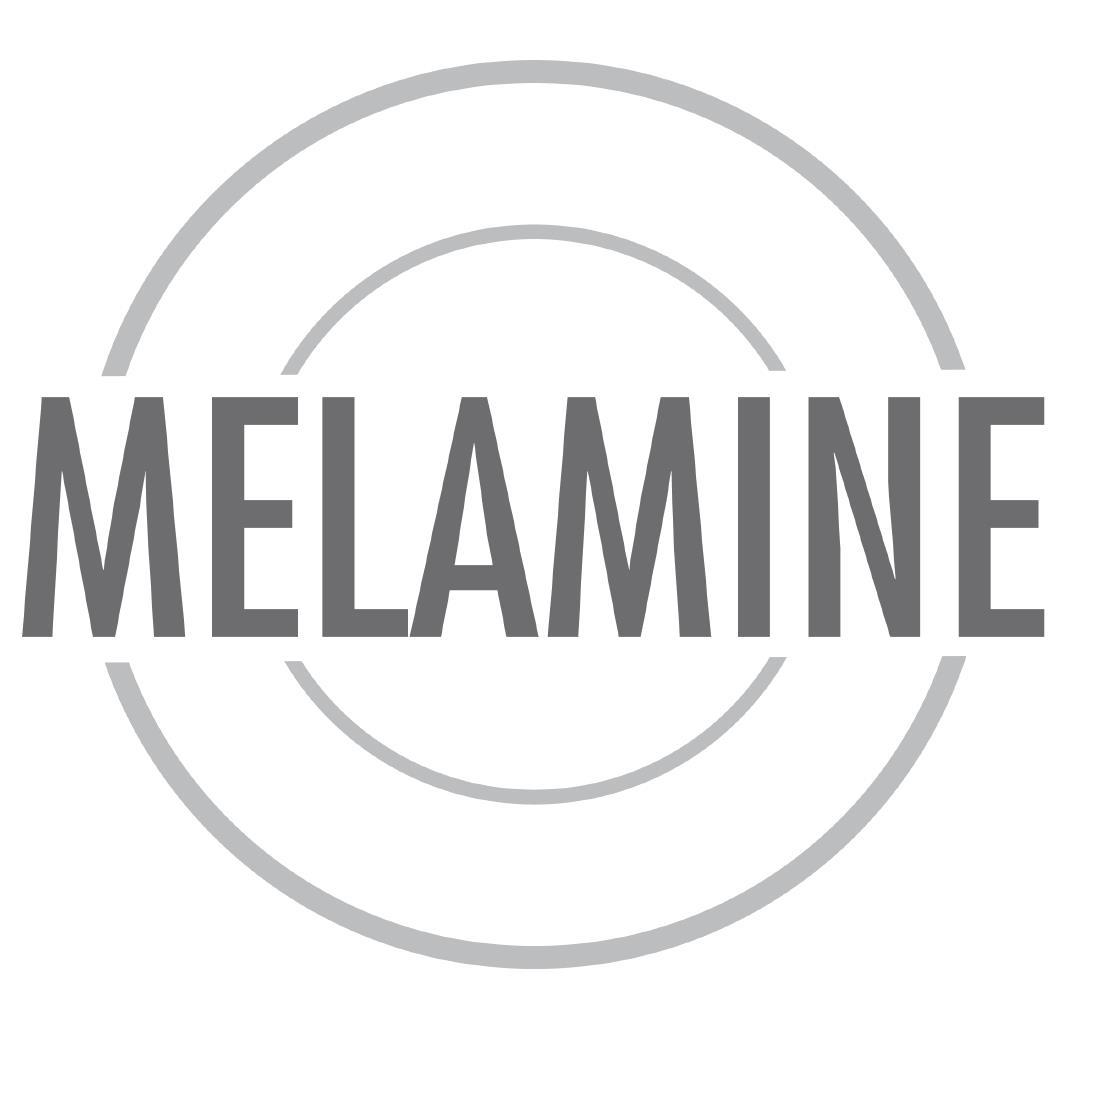 Olympia Kristallon Melamine Fluted Ramekins Black 76mm (Pack of 12) - DM164  - 2